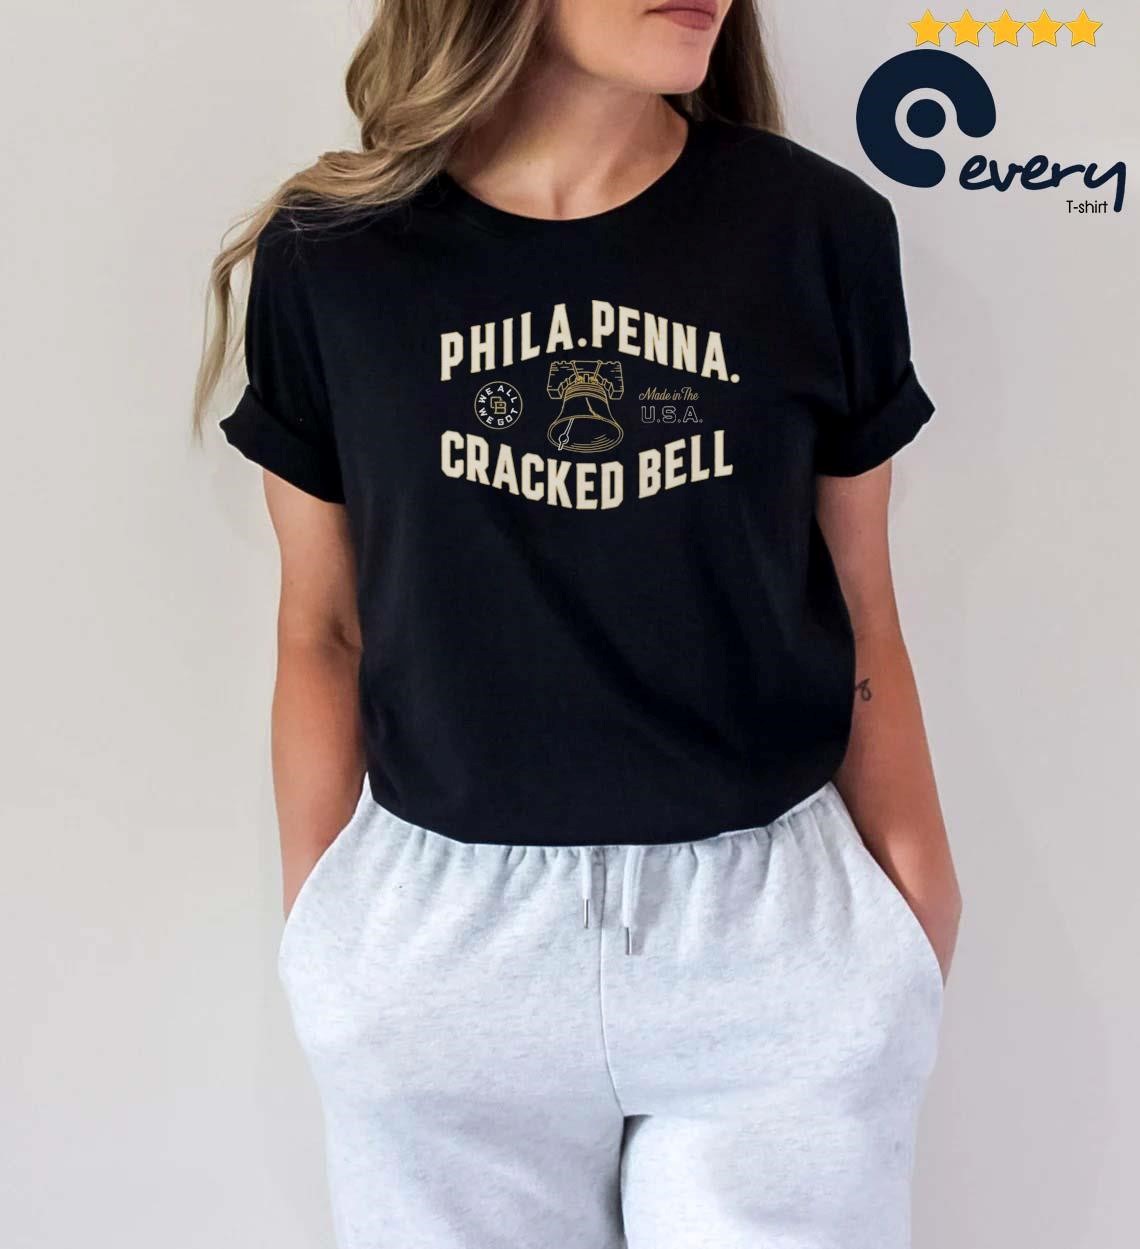 We All We Got Phila Penna Cracked Bell Shirt